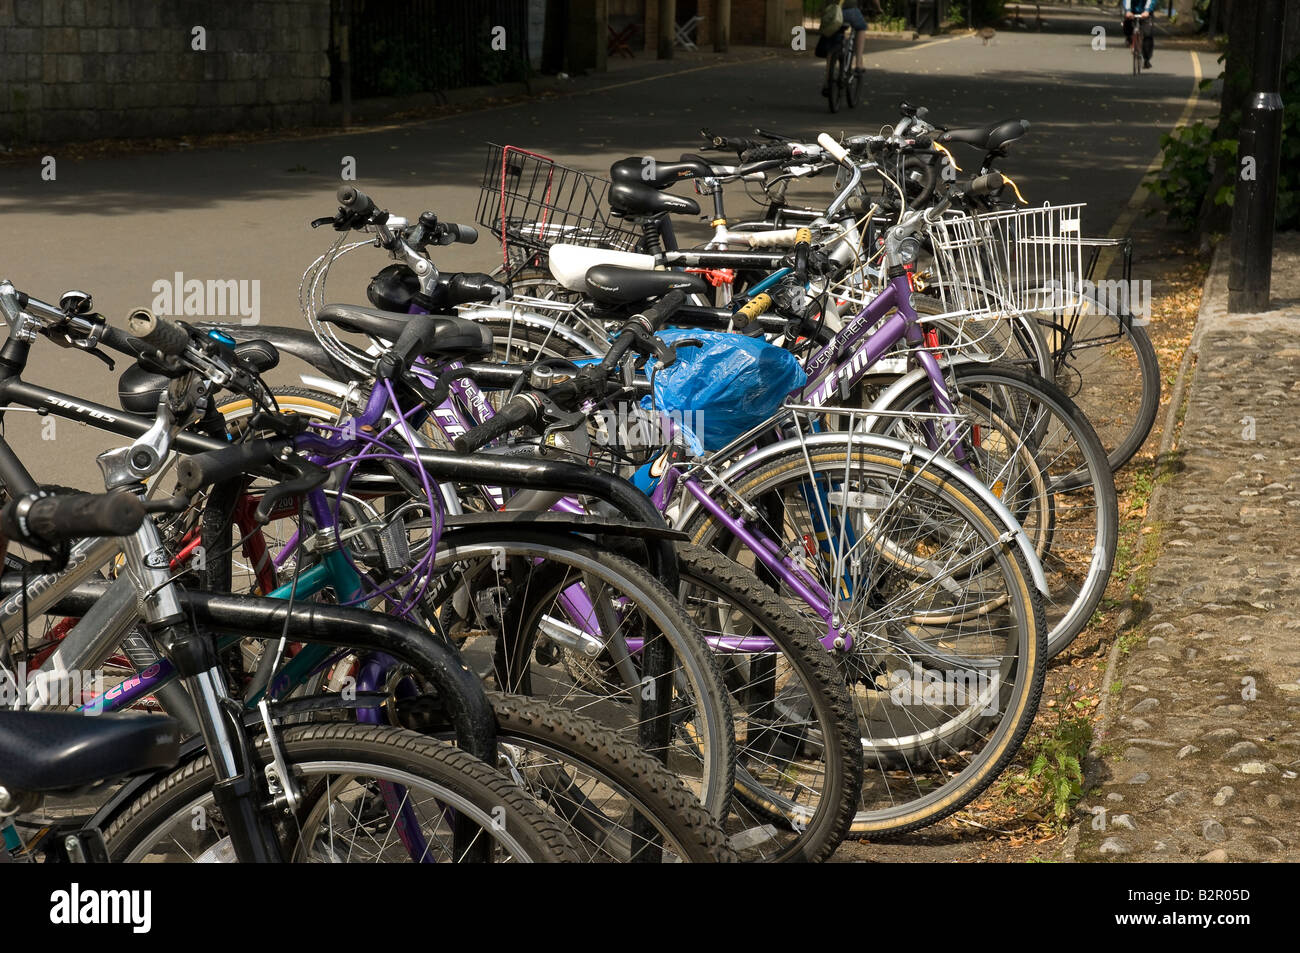 Bike rack, uk High Resolution Stock Photography and Images - Alamy